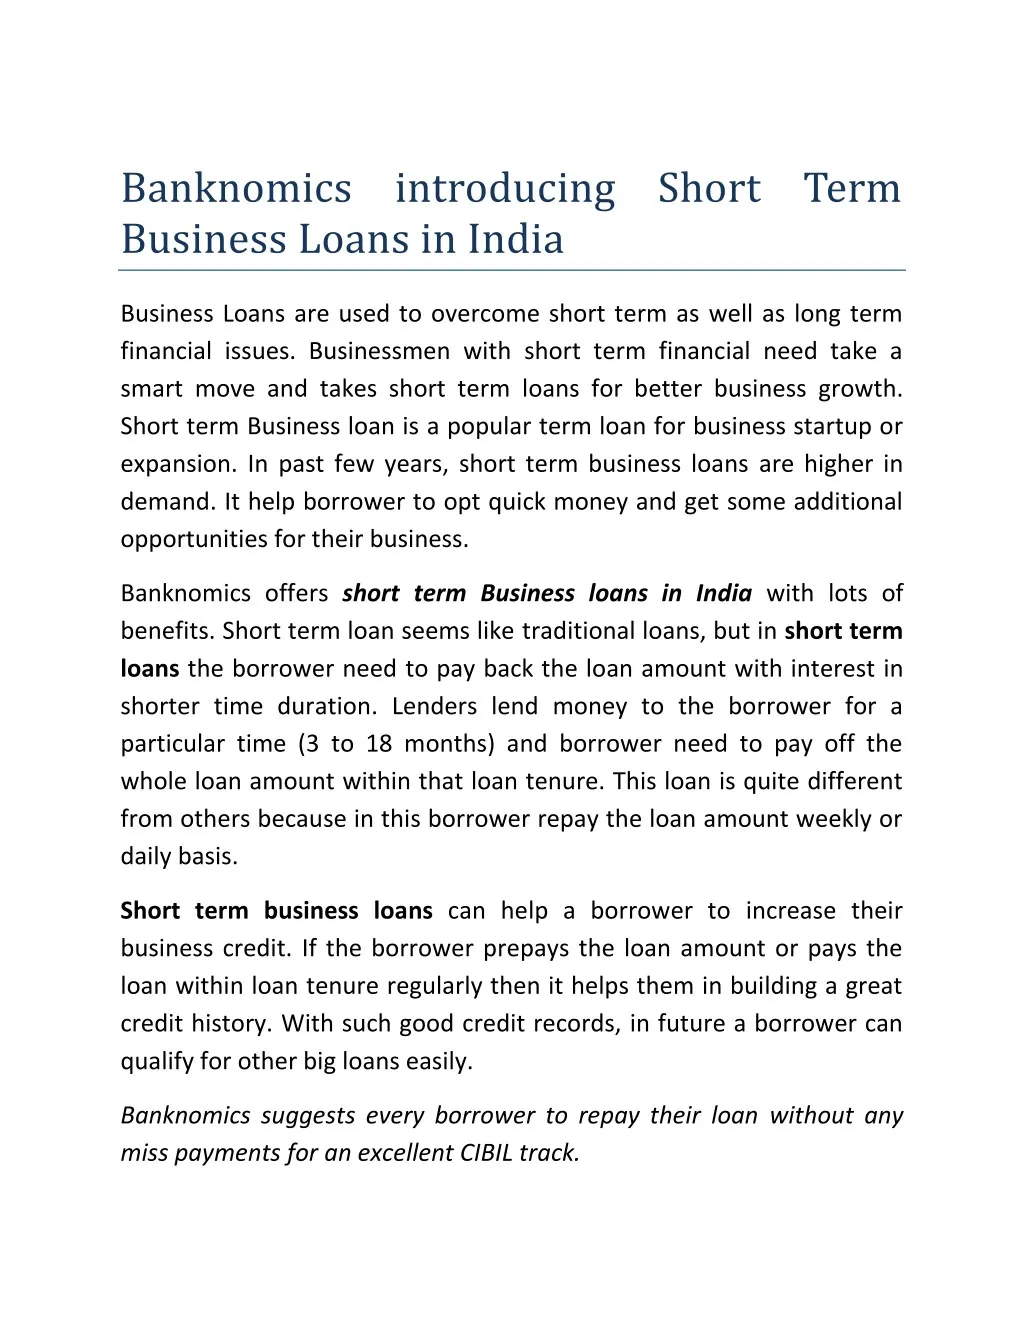 banknomics introducing short term business loans